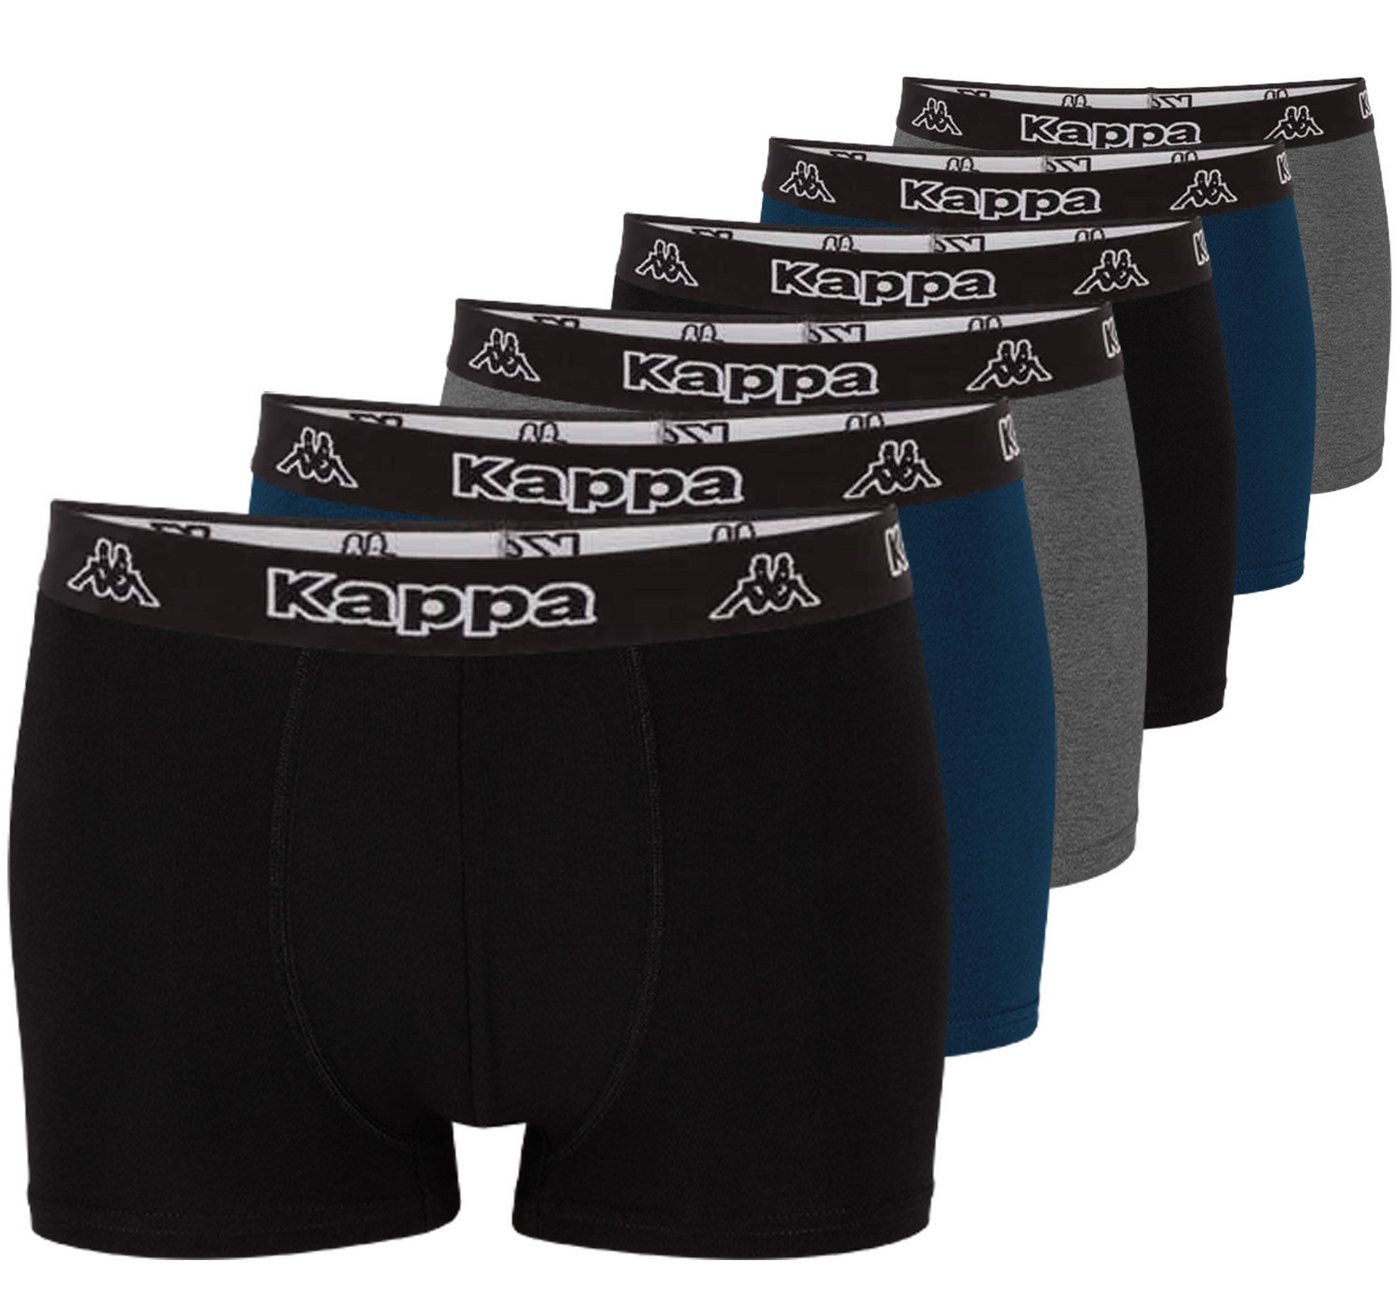 Kappa Boxershorts Retro Pants (6-St) Angenehmes Single Jersey Material von Kappa